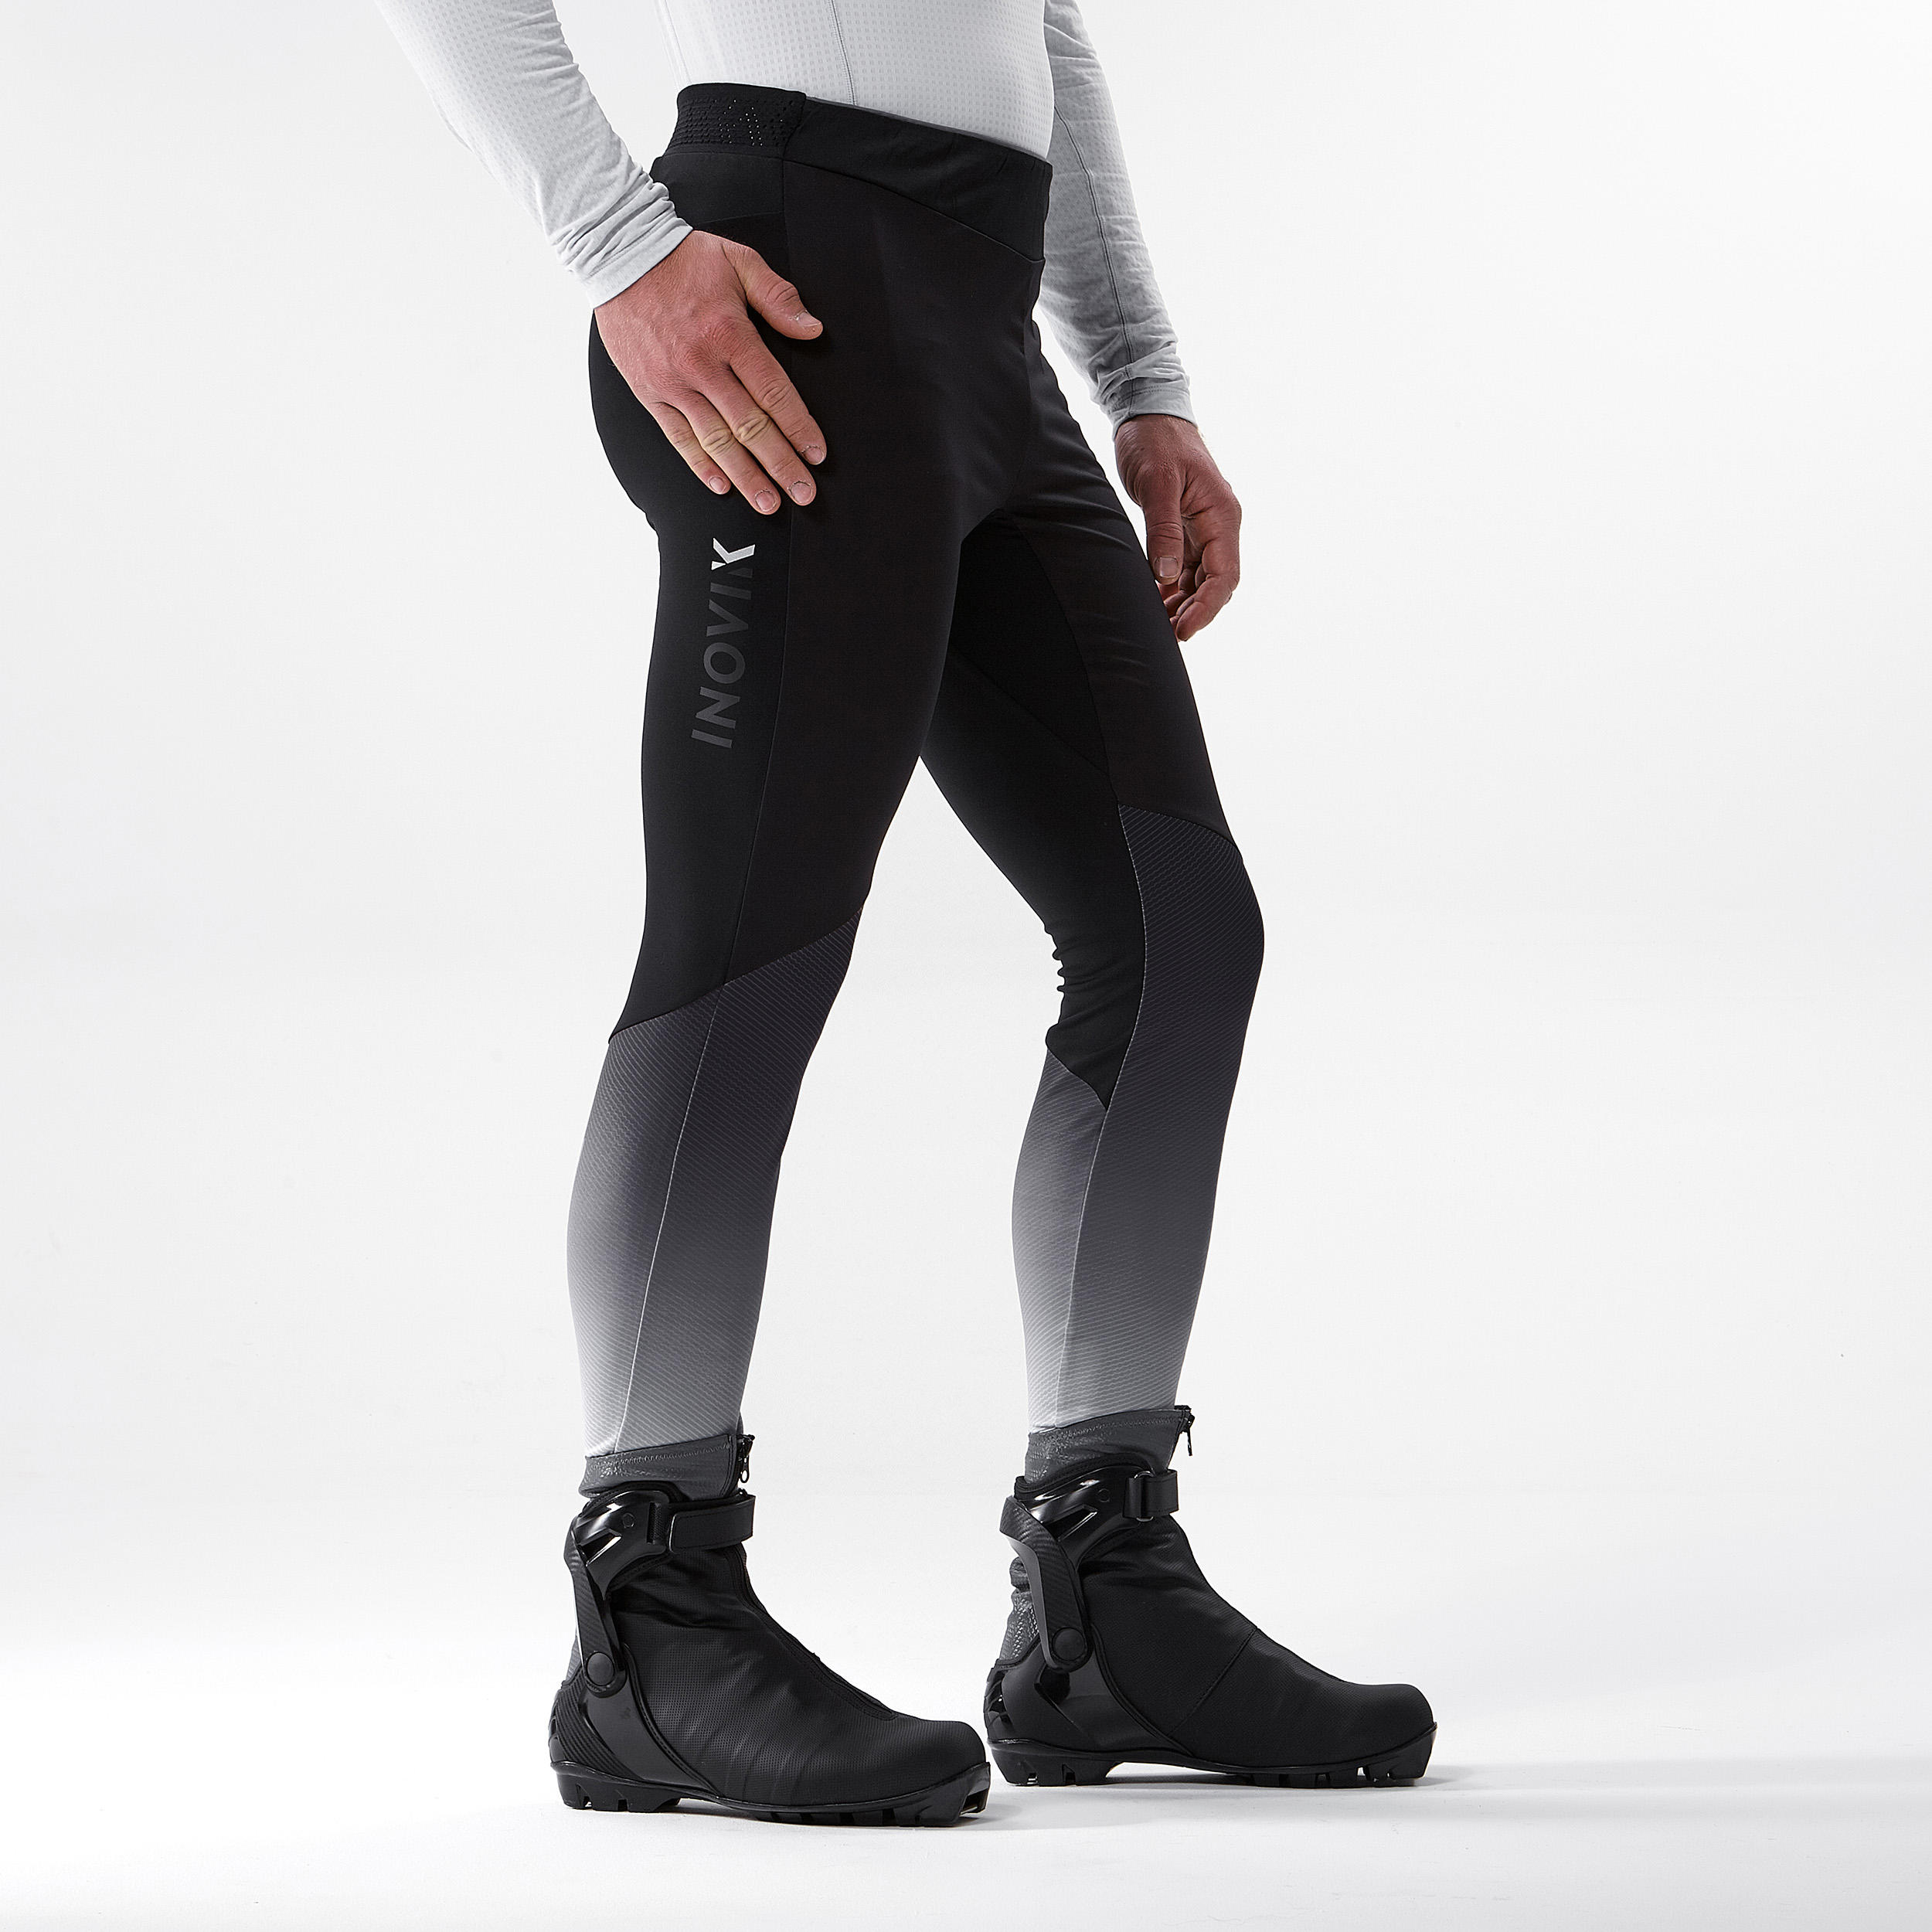 FISCHER-SKILETICS MULTISPORT-TIGHTS BLACK - Cross-country ski leggings